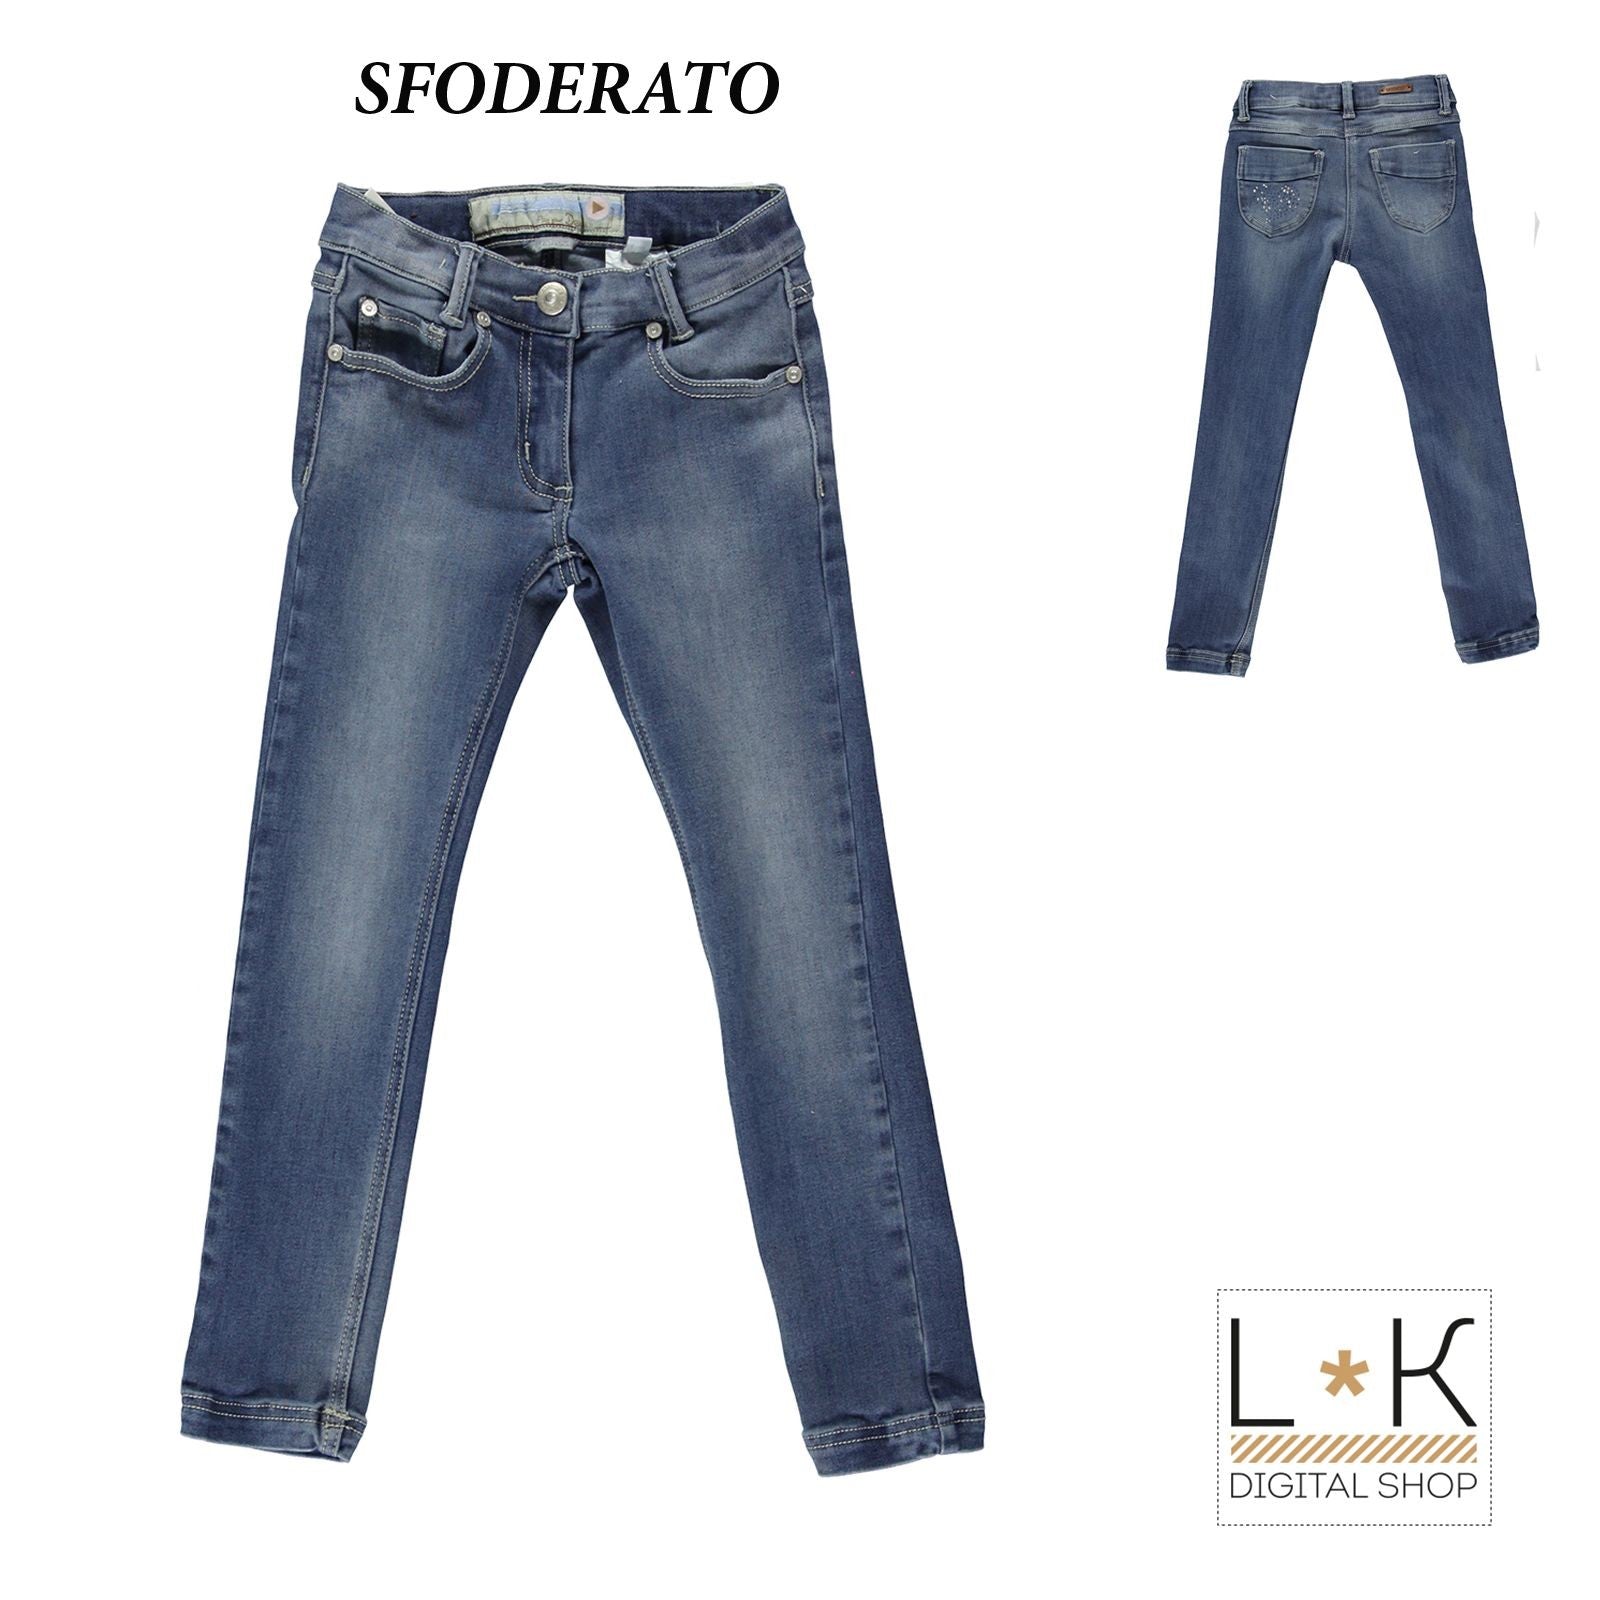 Jeans Slim Fit in Caldo Cotone Denim Bambina Sarabanda L865 - SARABANDA - LuxuryKids